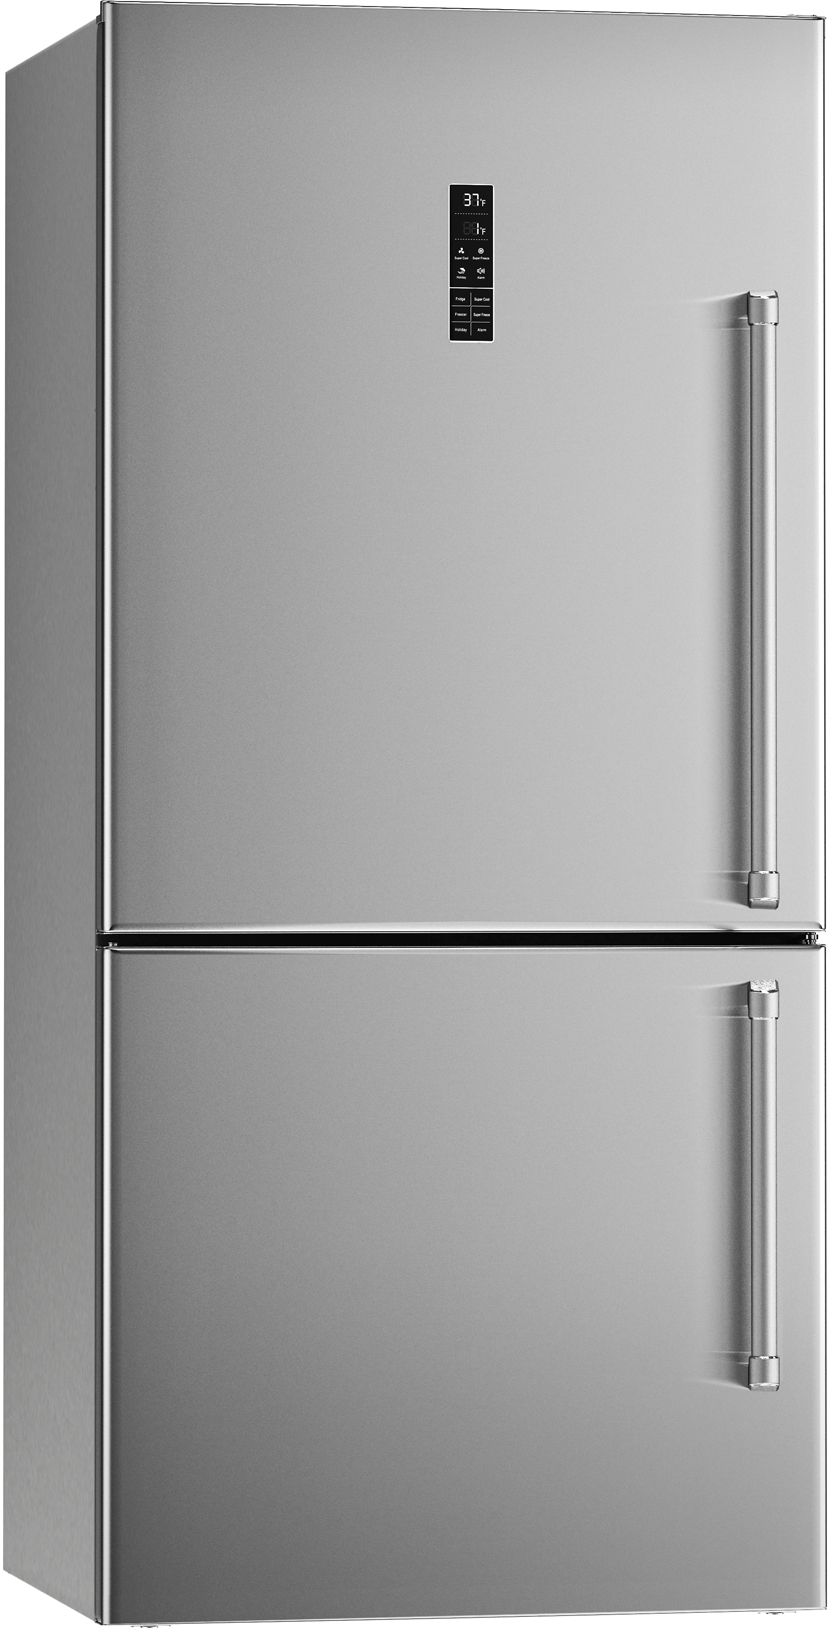 Bertazzoni Professional Series 17 Cu. Ft. Stainless Steel Counter Depth Bottom Freezer Refrigerator